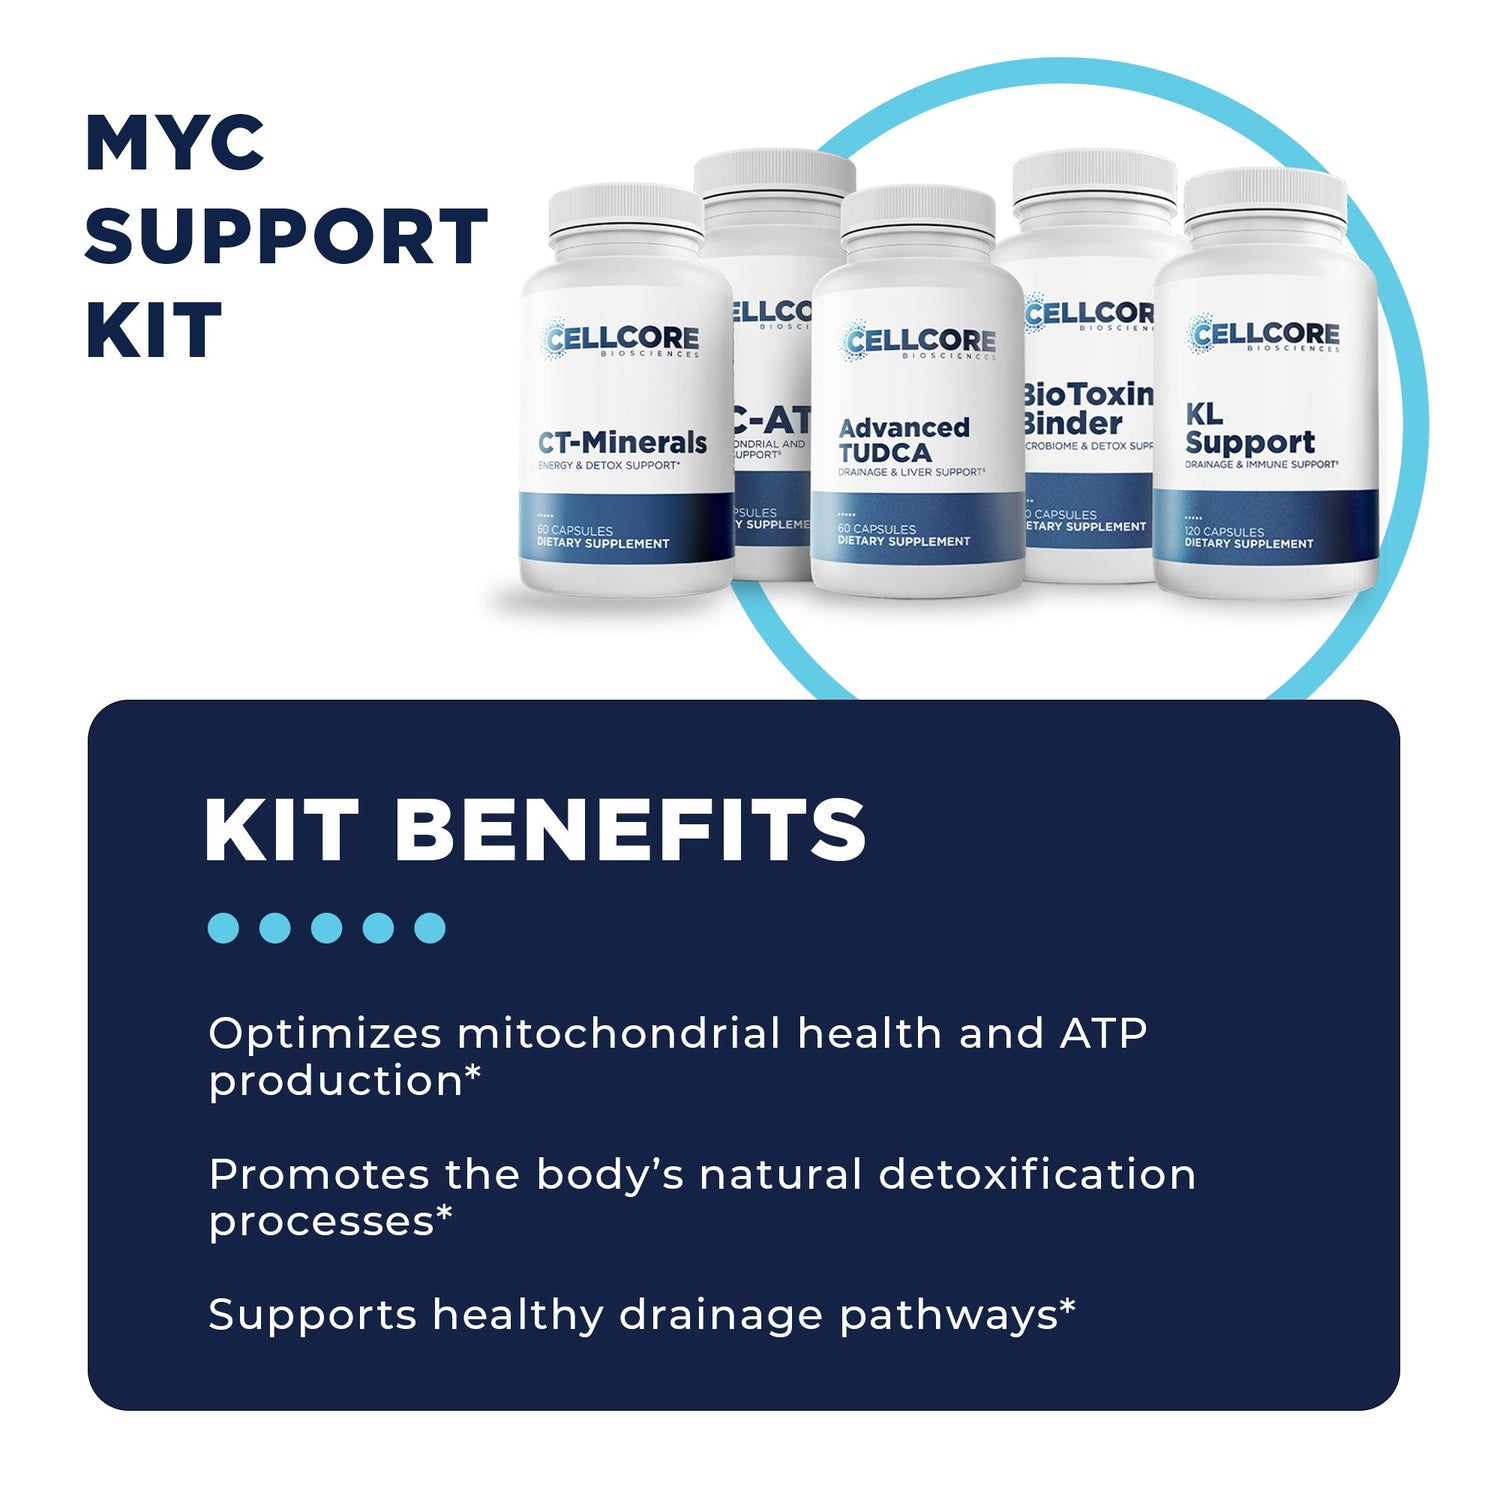 MYC Support Kit Benefits